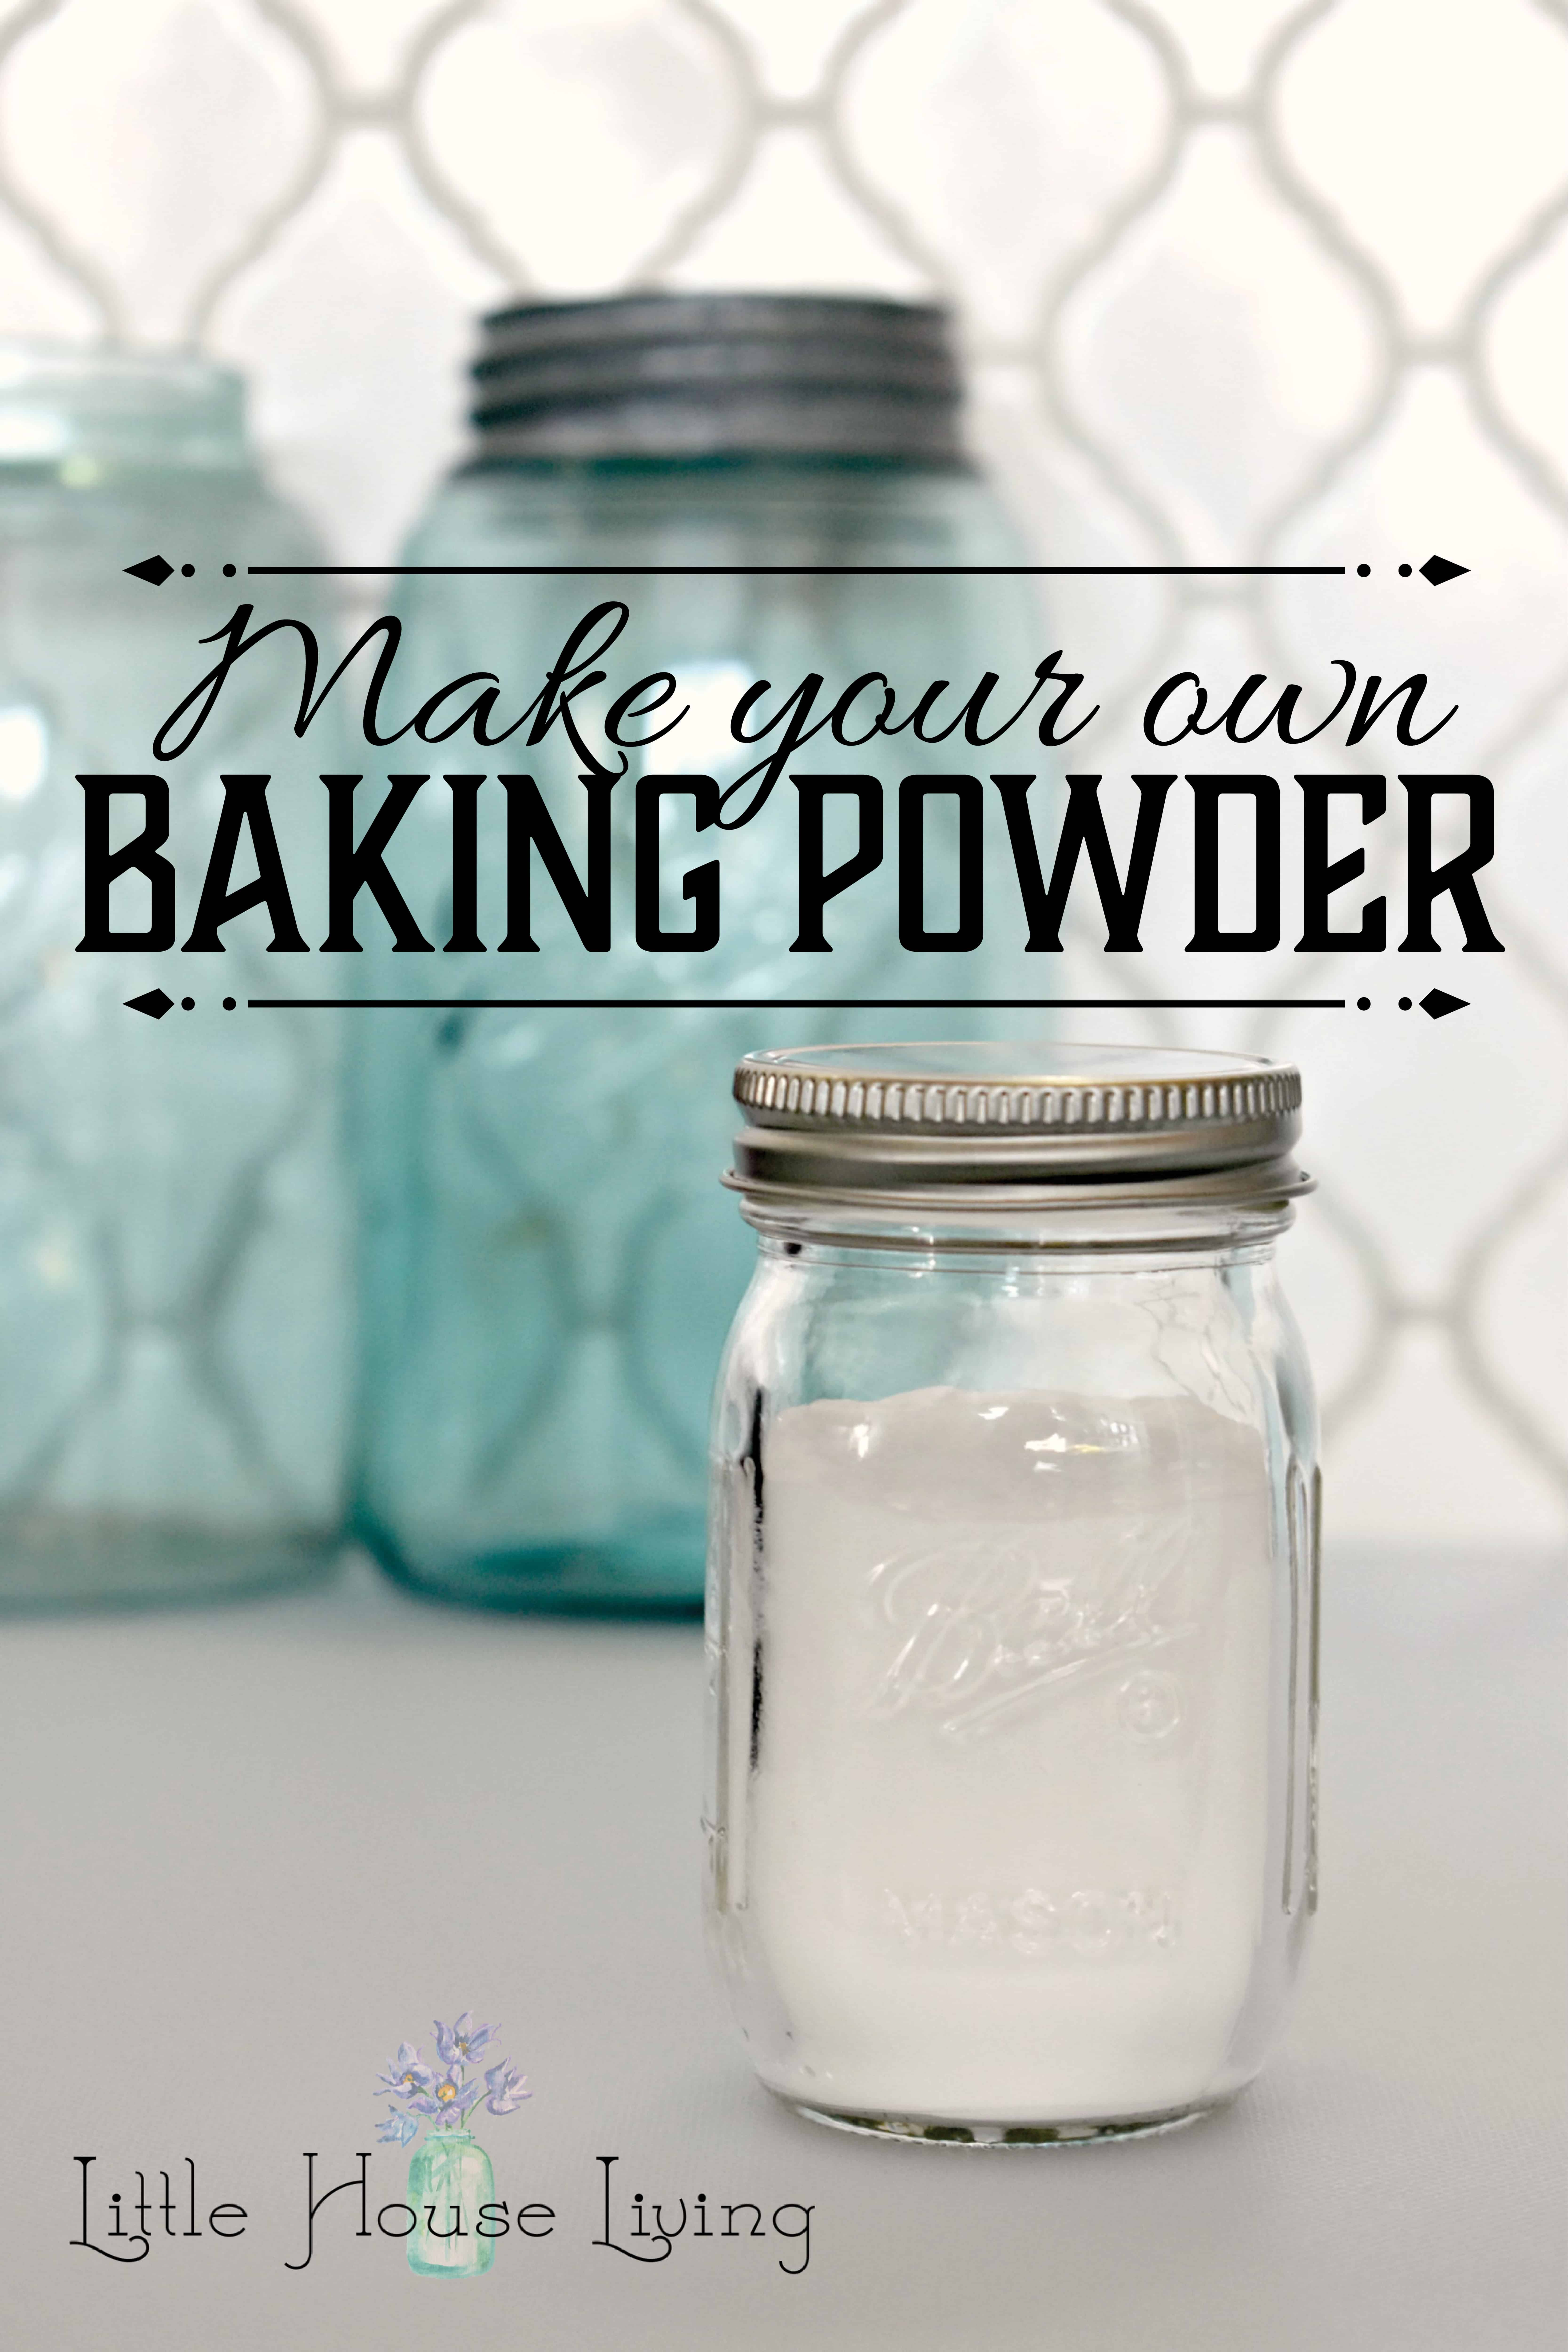 Homemade Baking Powder